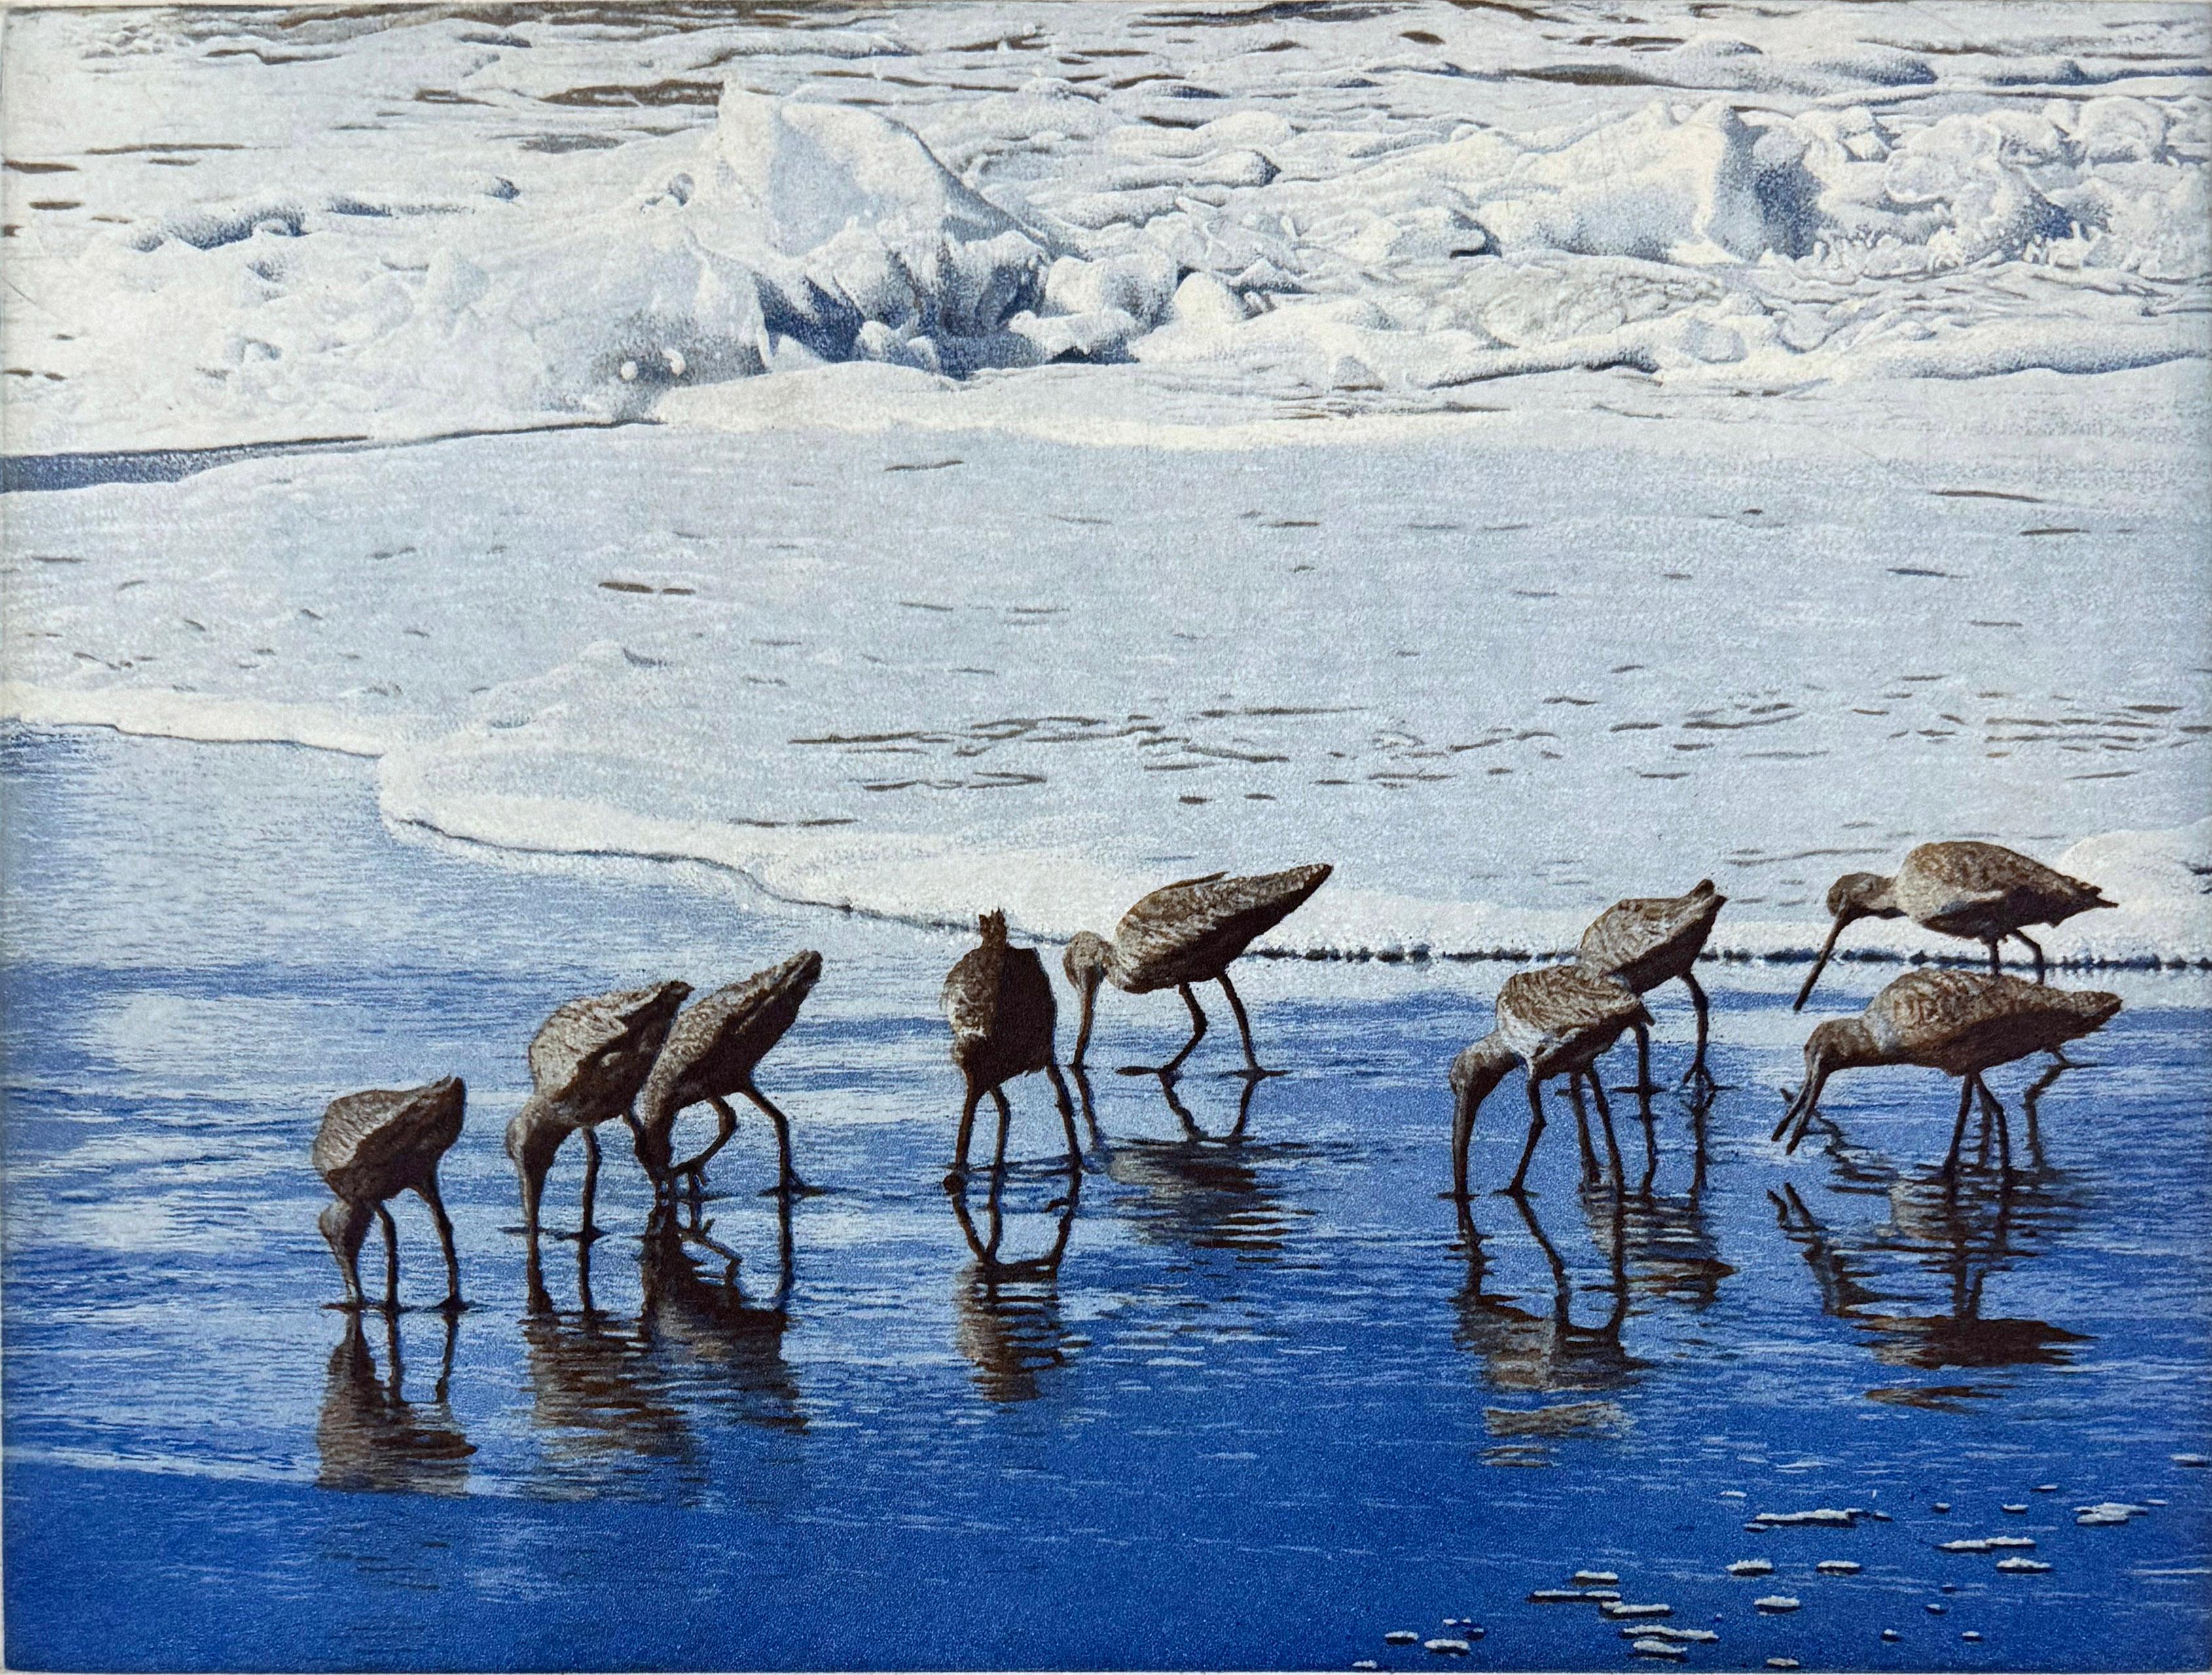 Shorebirds, by Stephen McMillan